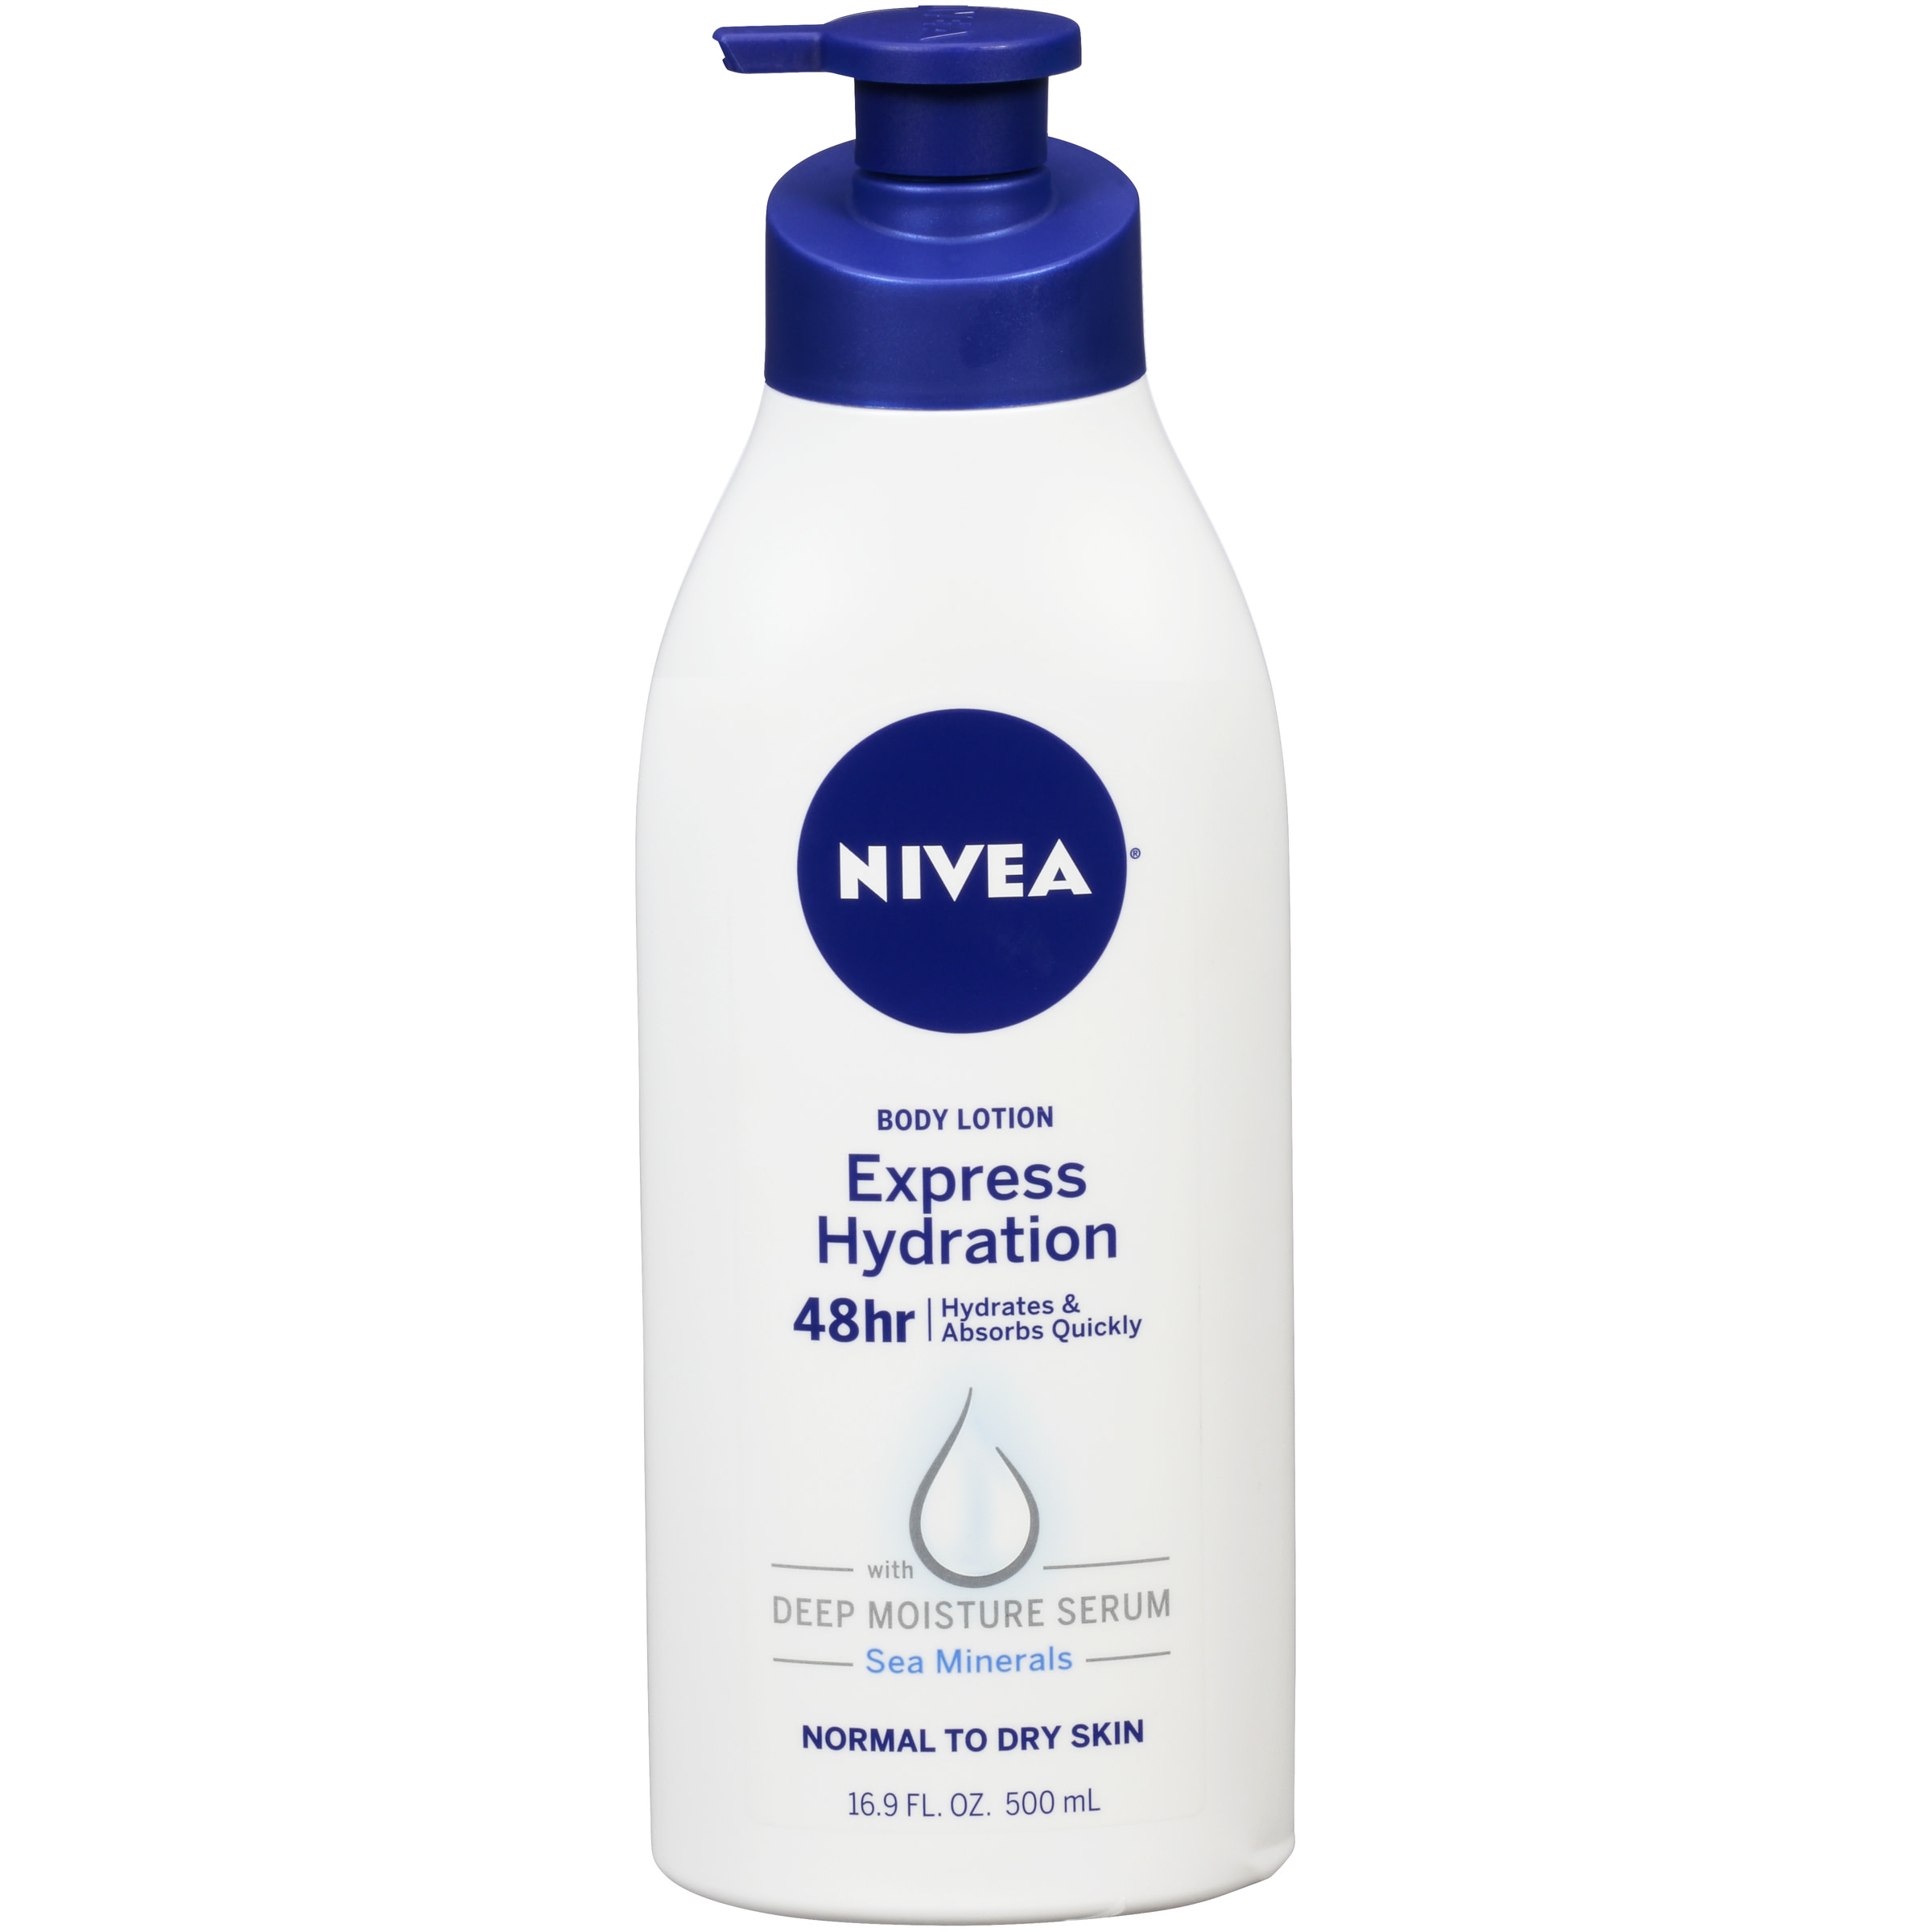 NIVEA Express Hydration Body Lotion 16.9 fl. oz. - image 1 of 3